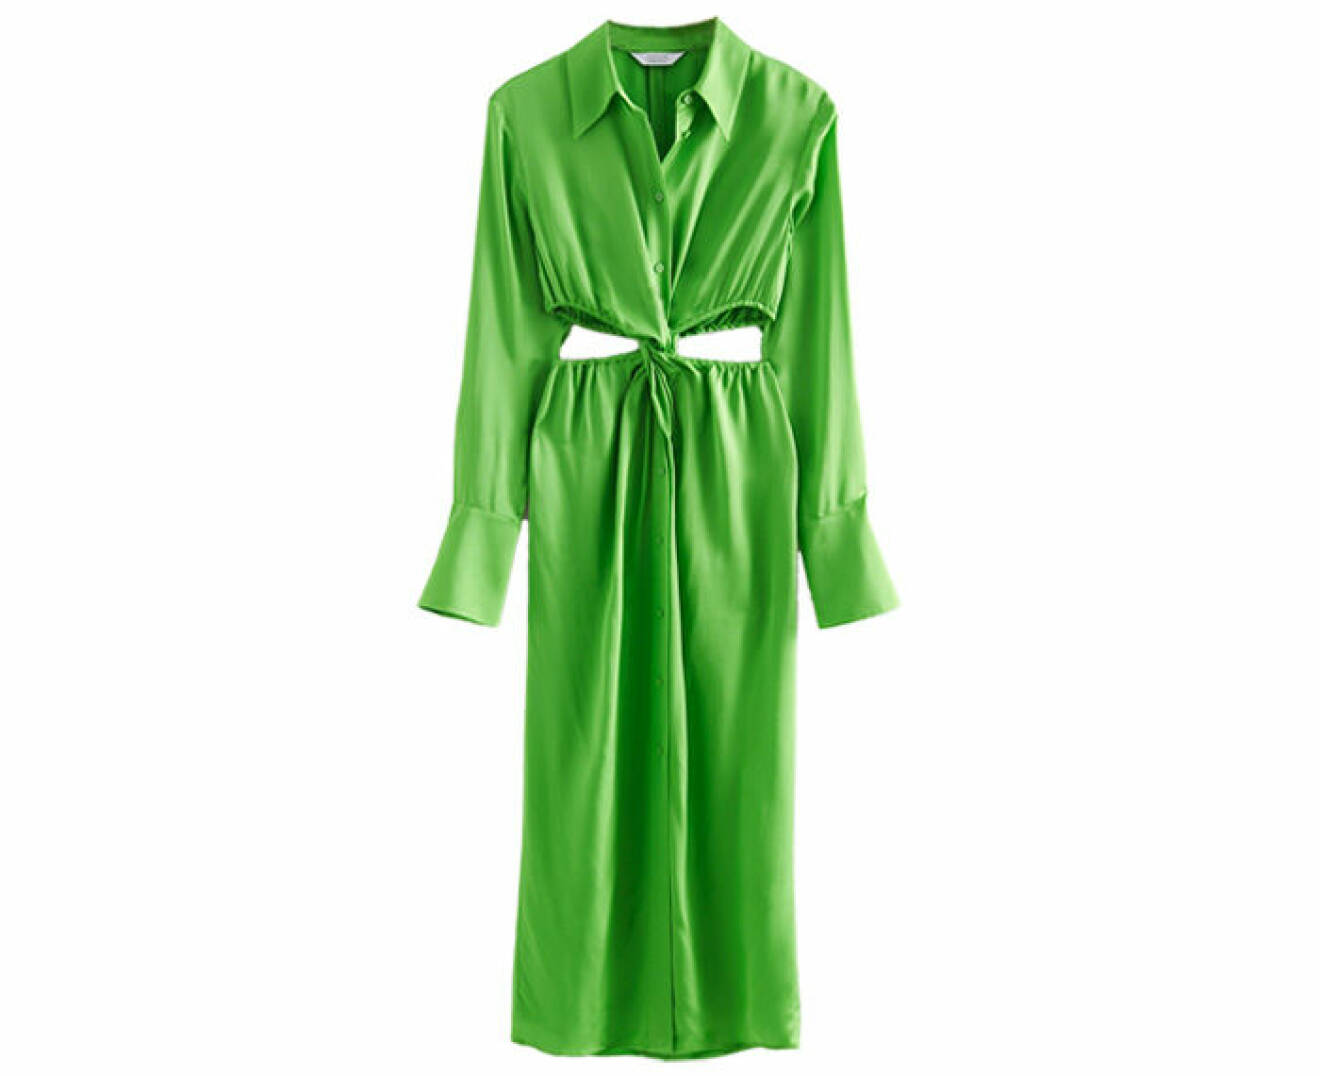 vadlång klänning med cut outs i grön nyans med skjortkrage från &amp; Other Stories